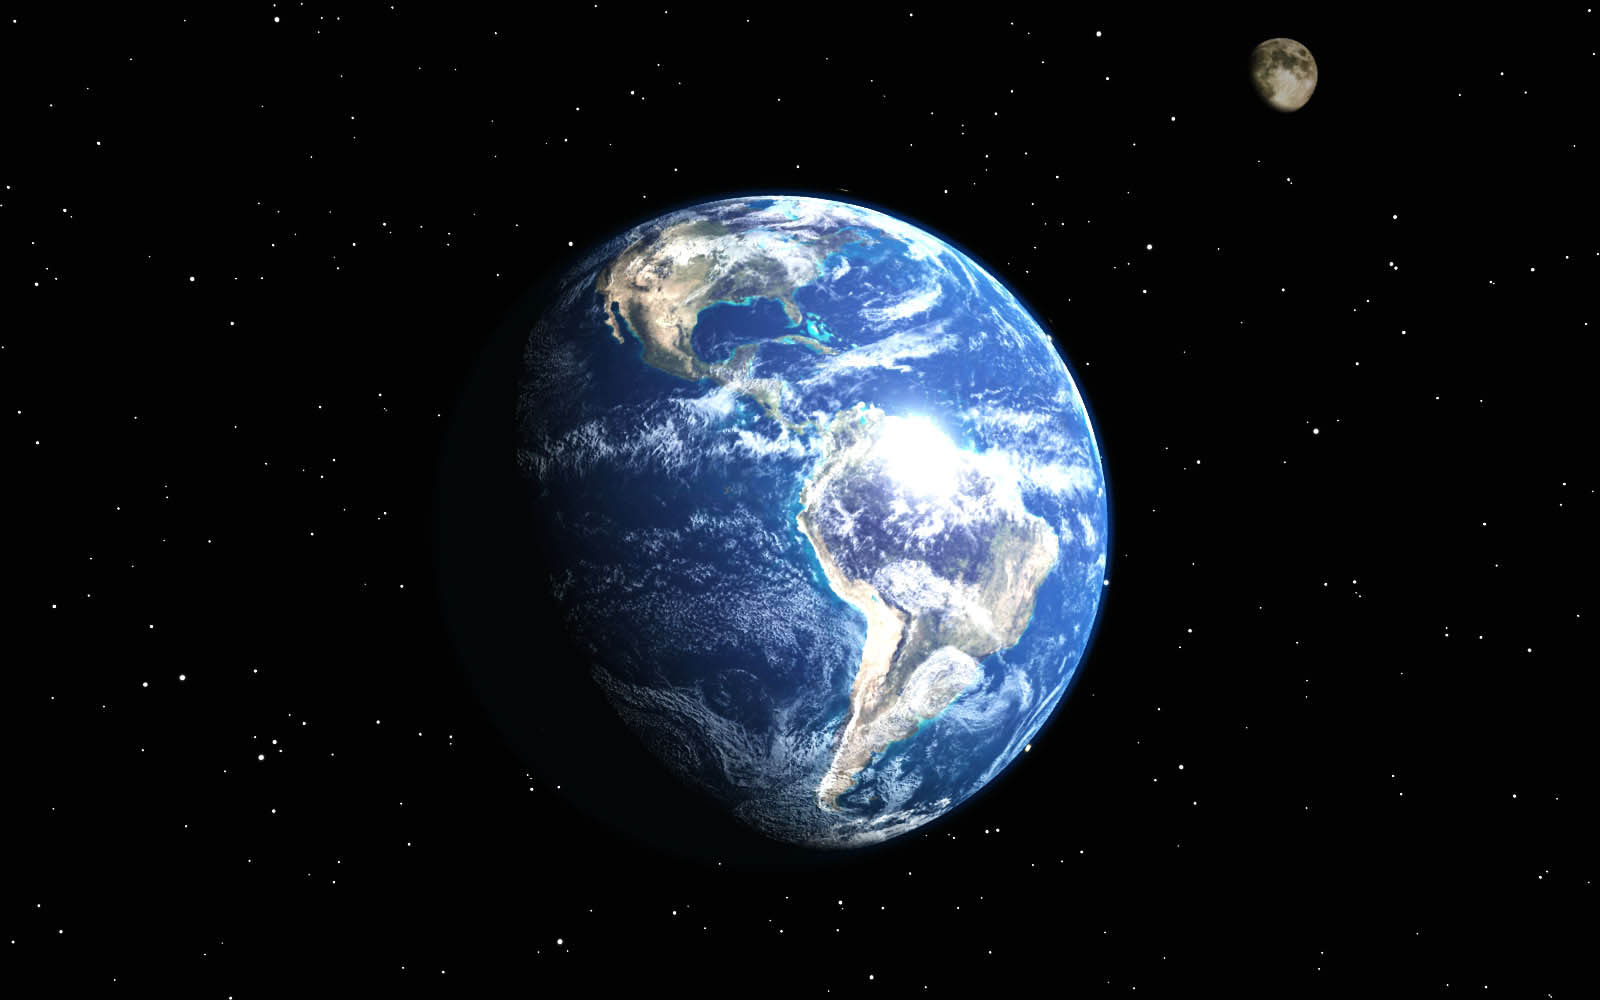 And Moon Wallpaper Earth Desktop